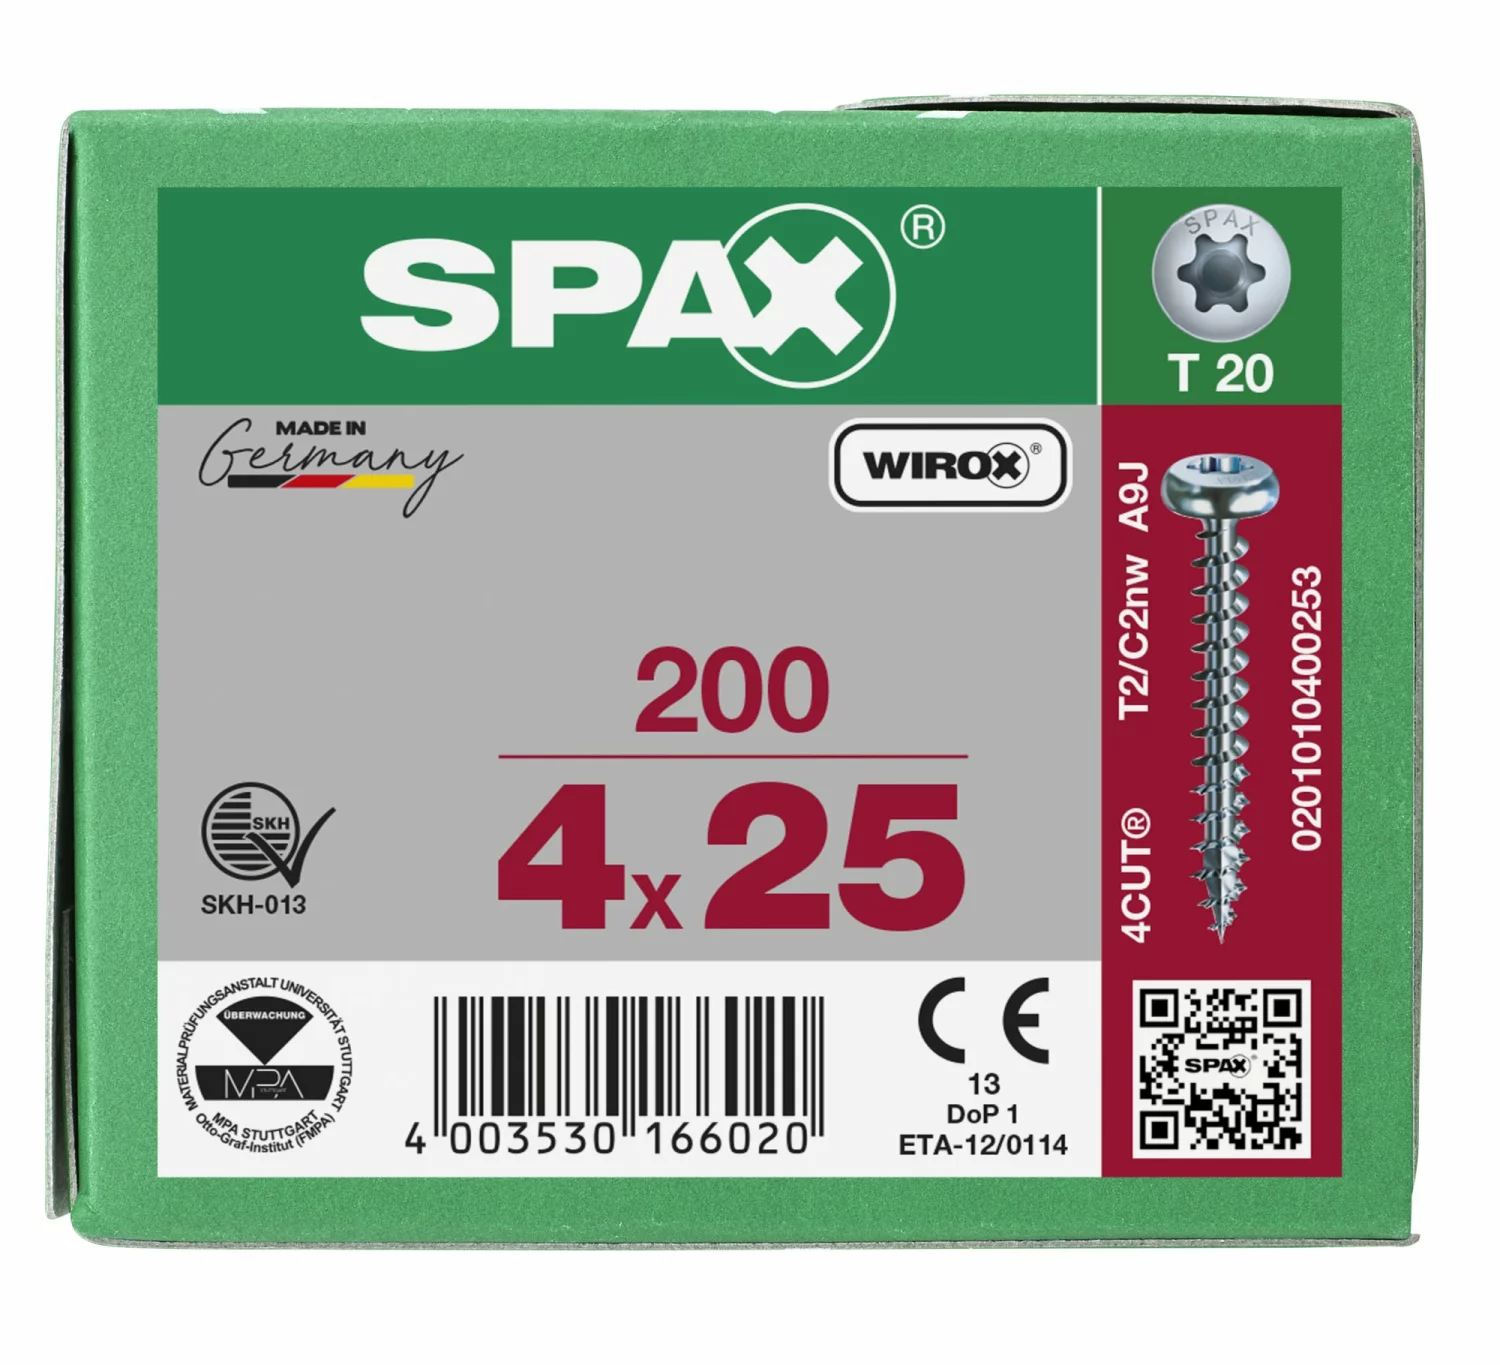 SPAX 201010400253 Universele schroef, Bolkop, 4 x 25, Voldraad, T-STAR plus T20 - WIROX - 200 stuks